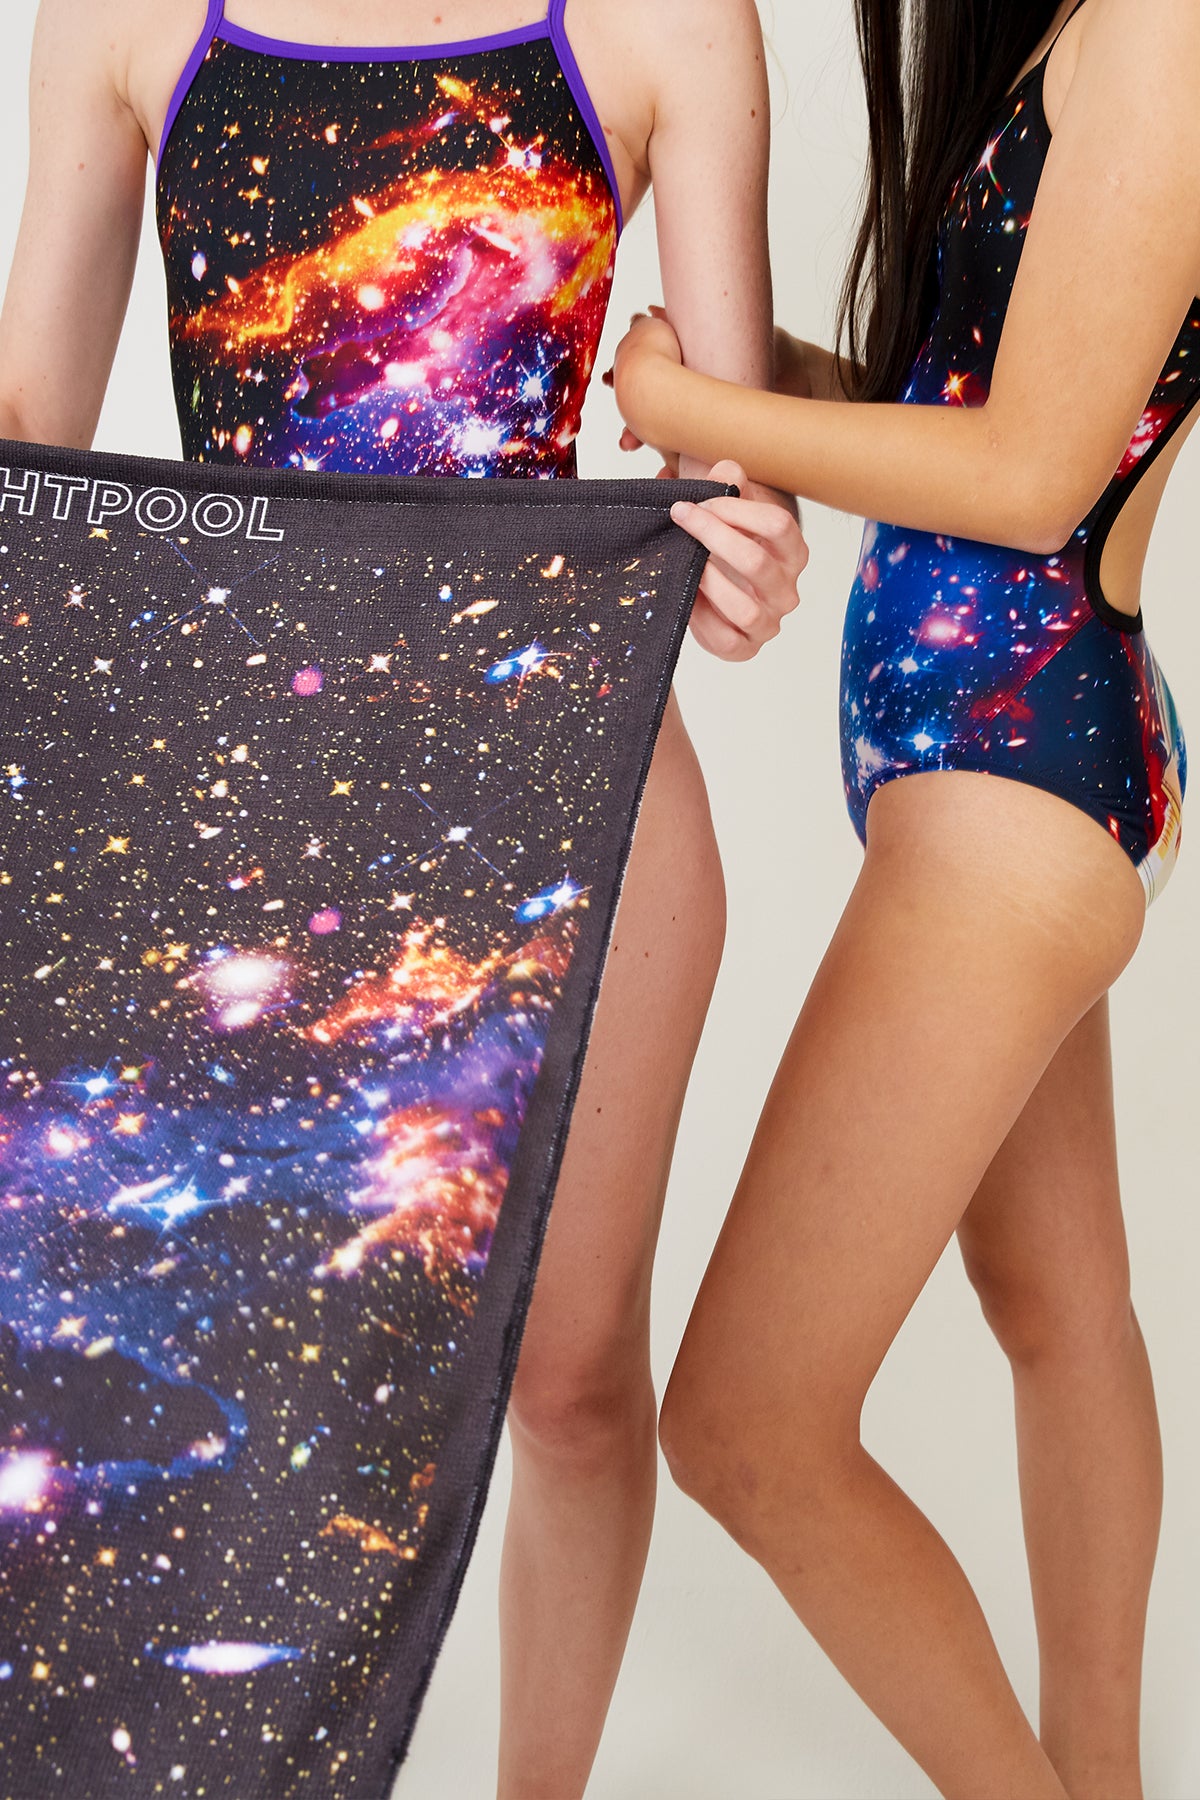 Galaxy Swimmer towel - Cosmic black